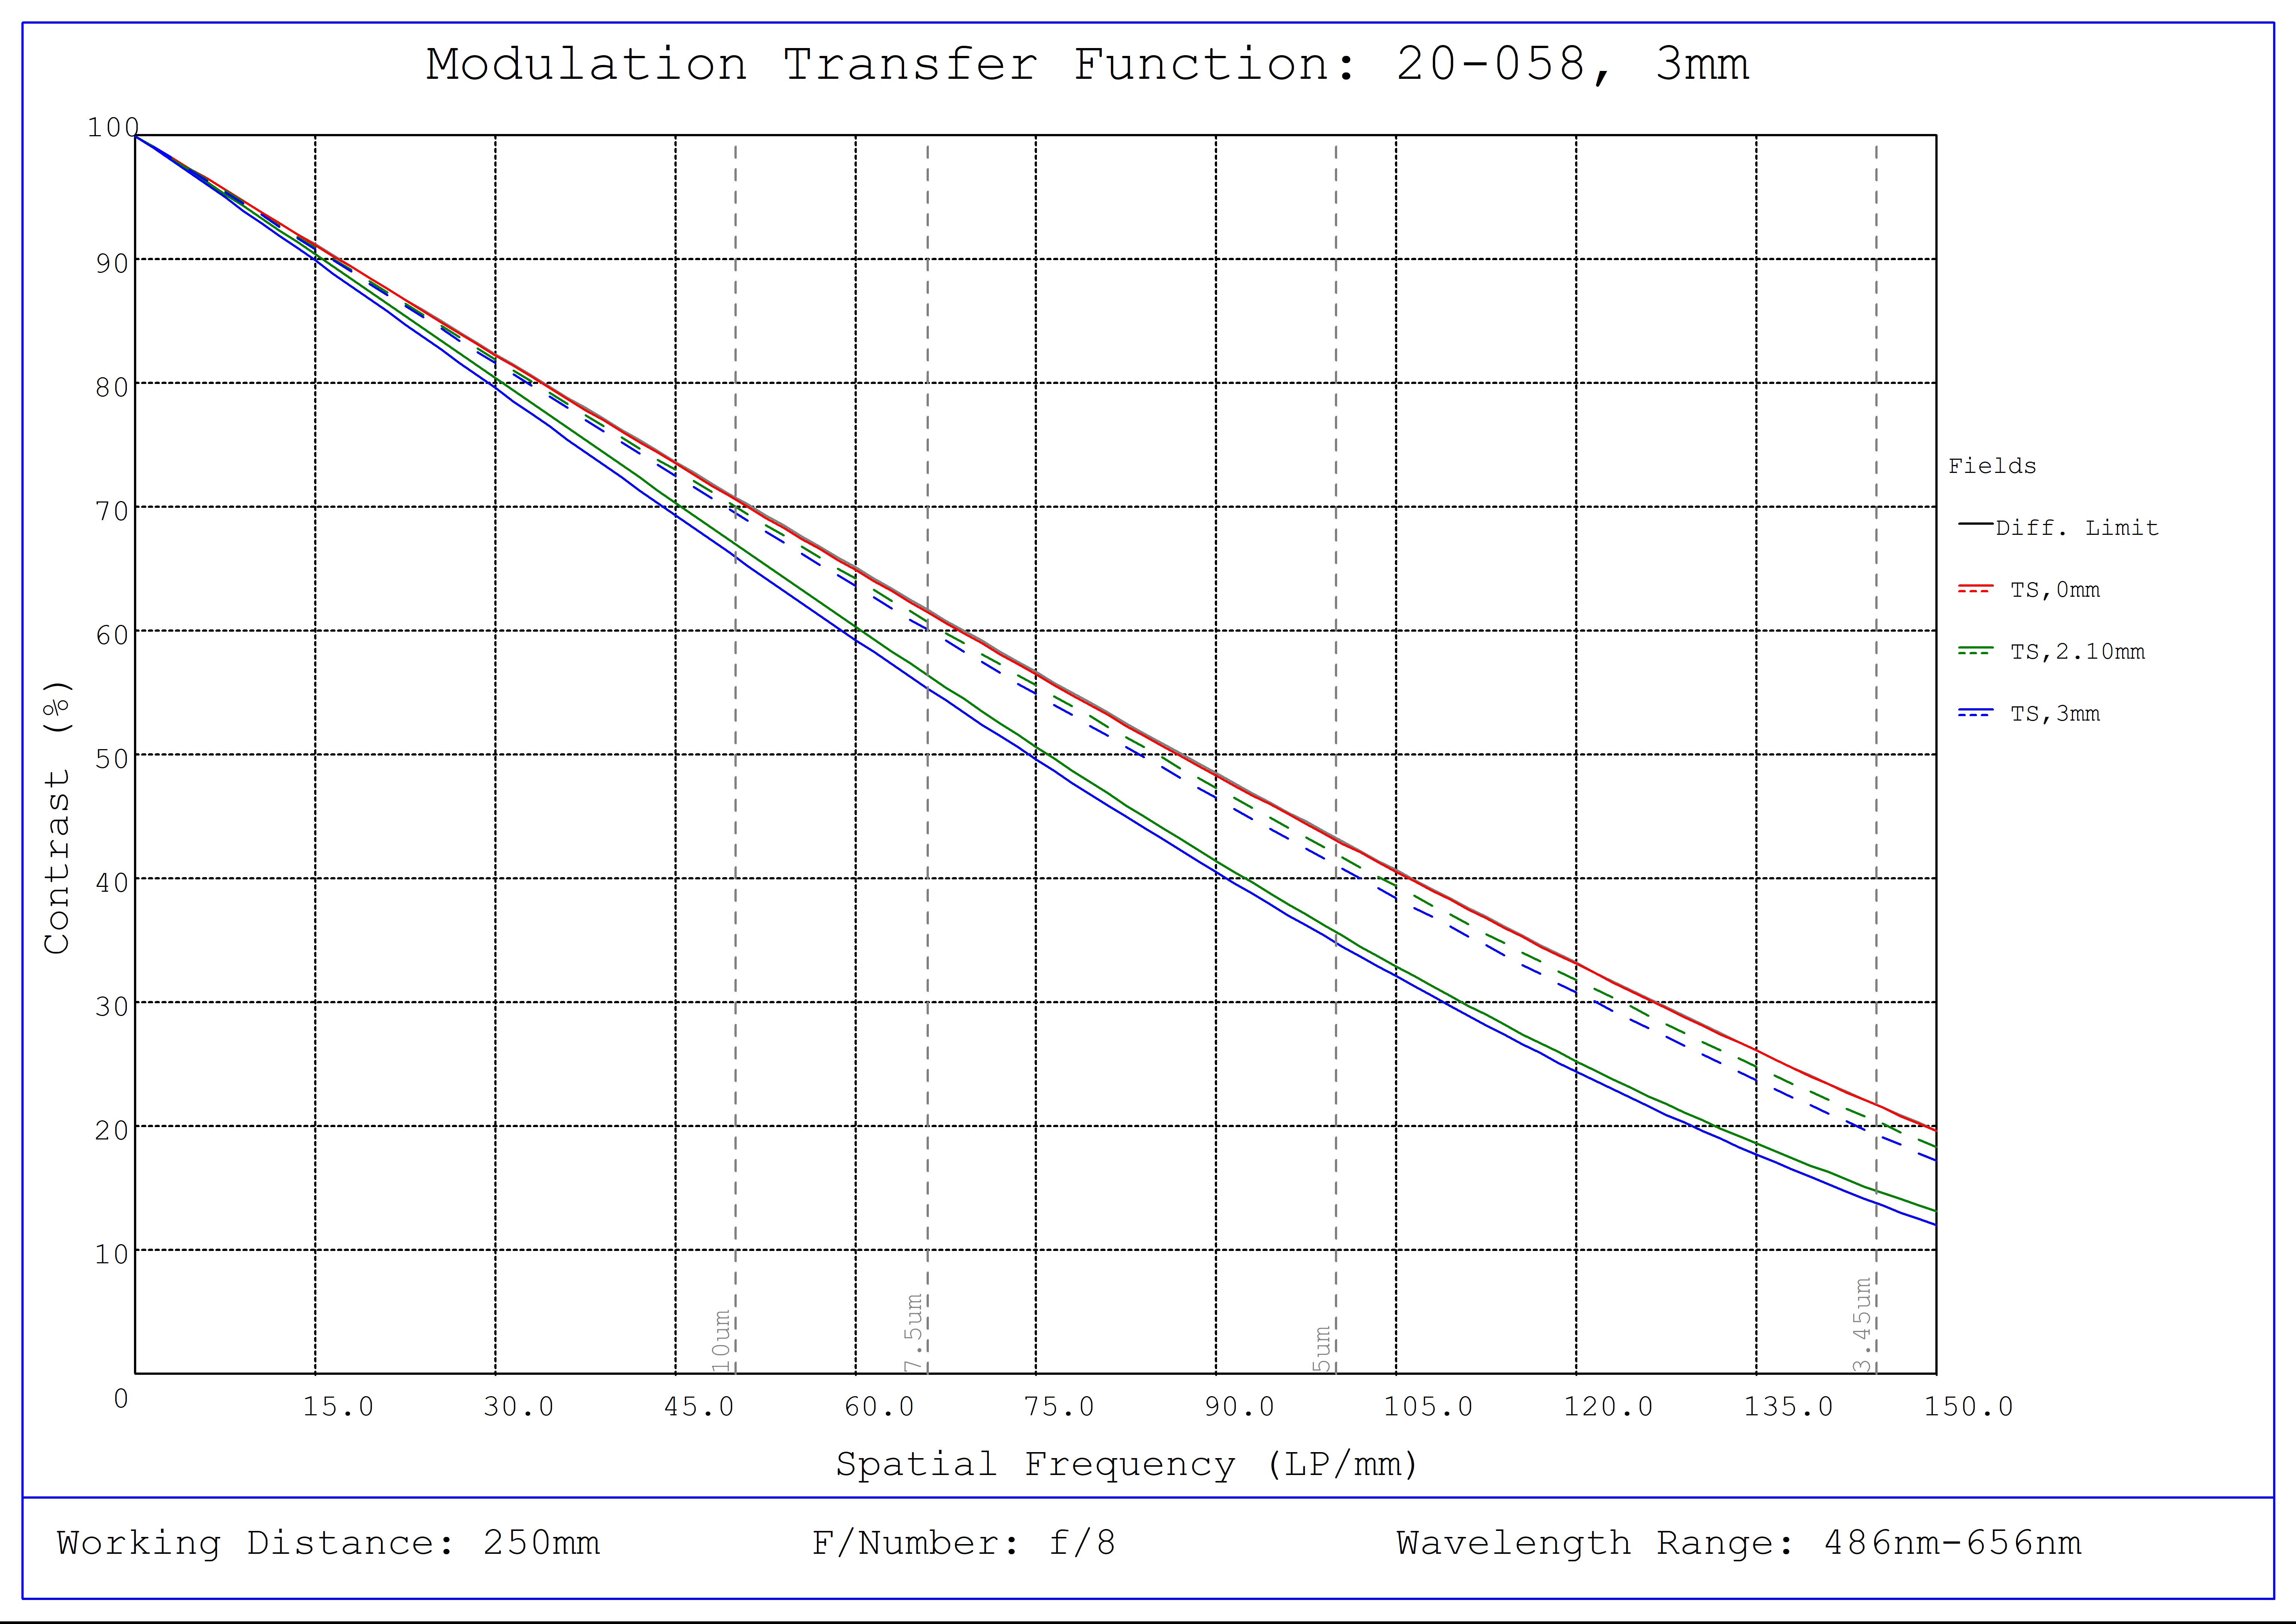 #20-058, 3mm FL f/8.0, IR-Cut Blue Series M12 Lens, Modulated Transfer Function (MTF) Plot, 250mm Working Distance, f8